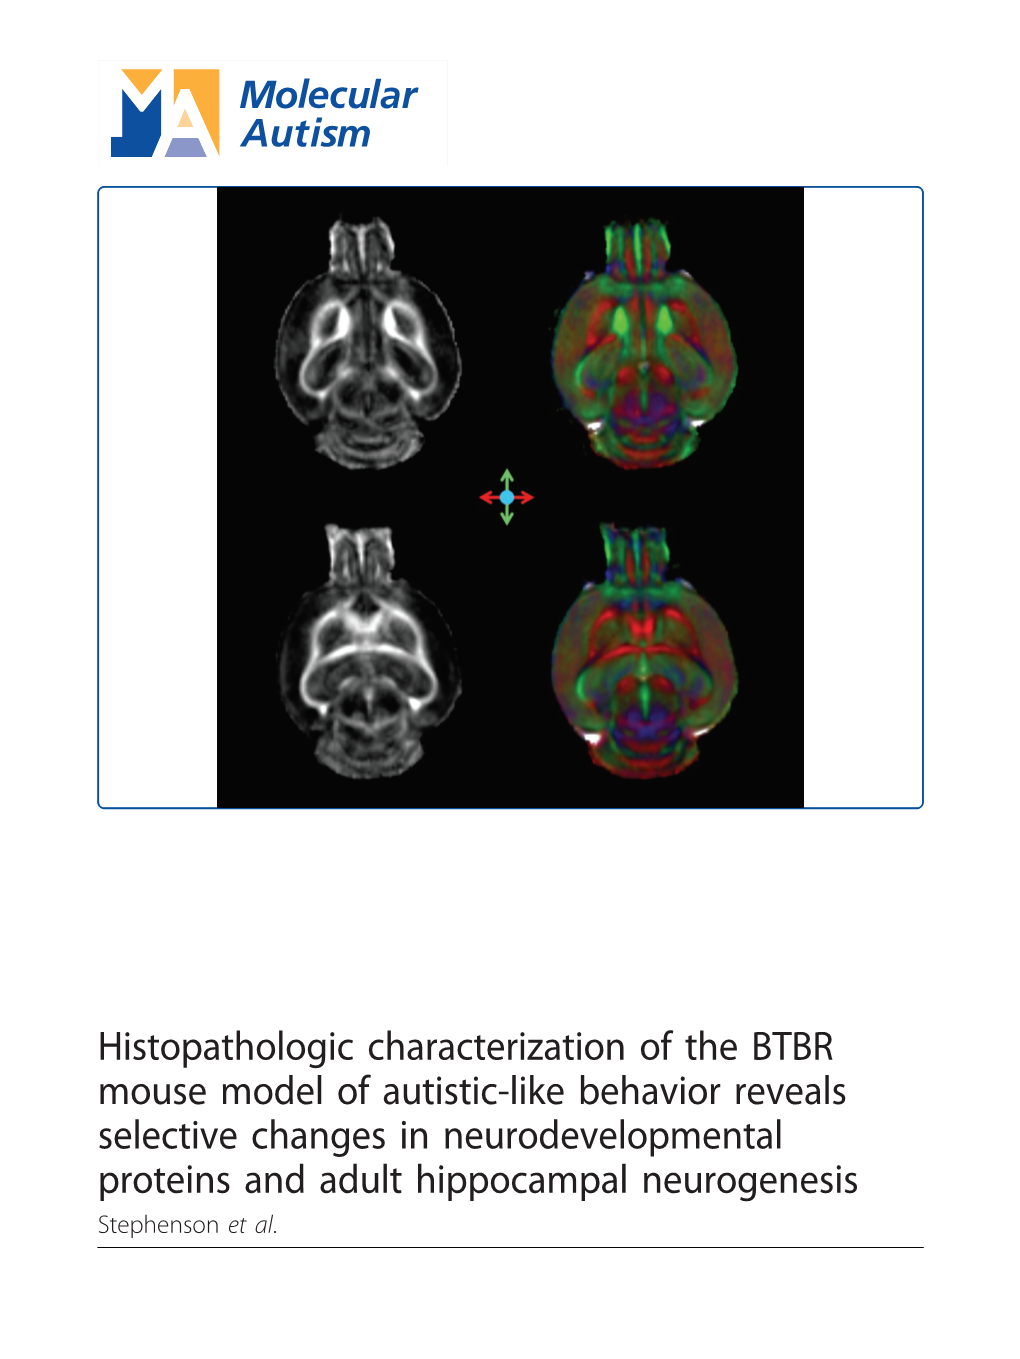 Histopathologic Characterization of the BTBR Mouse Model of Autistic-Like